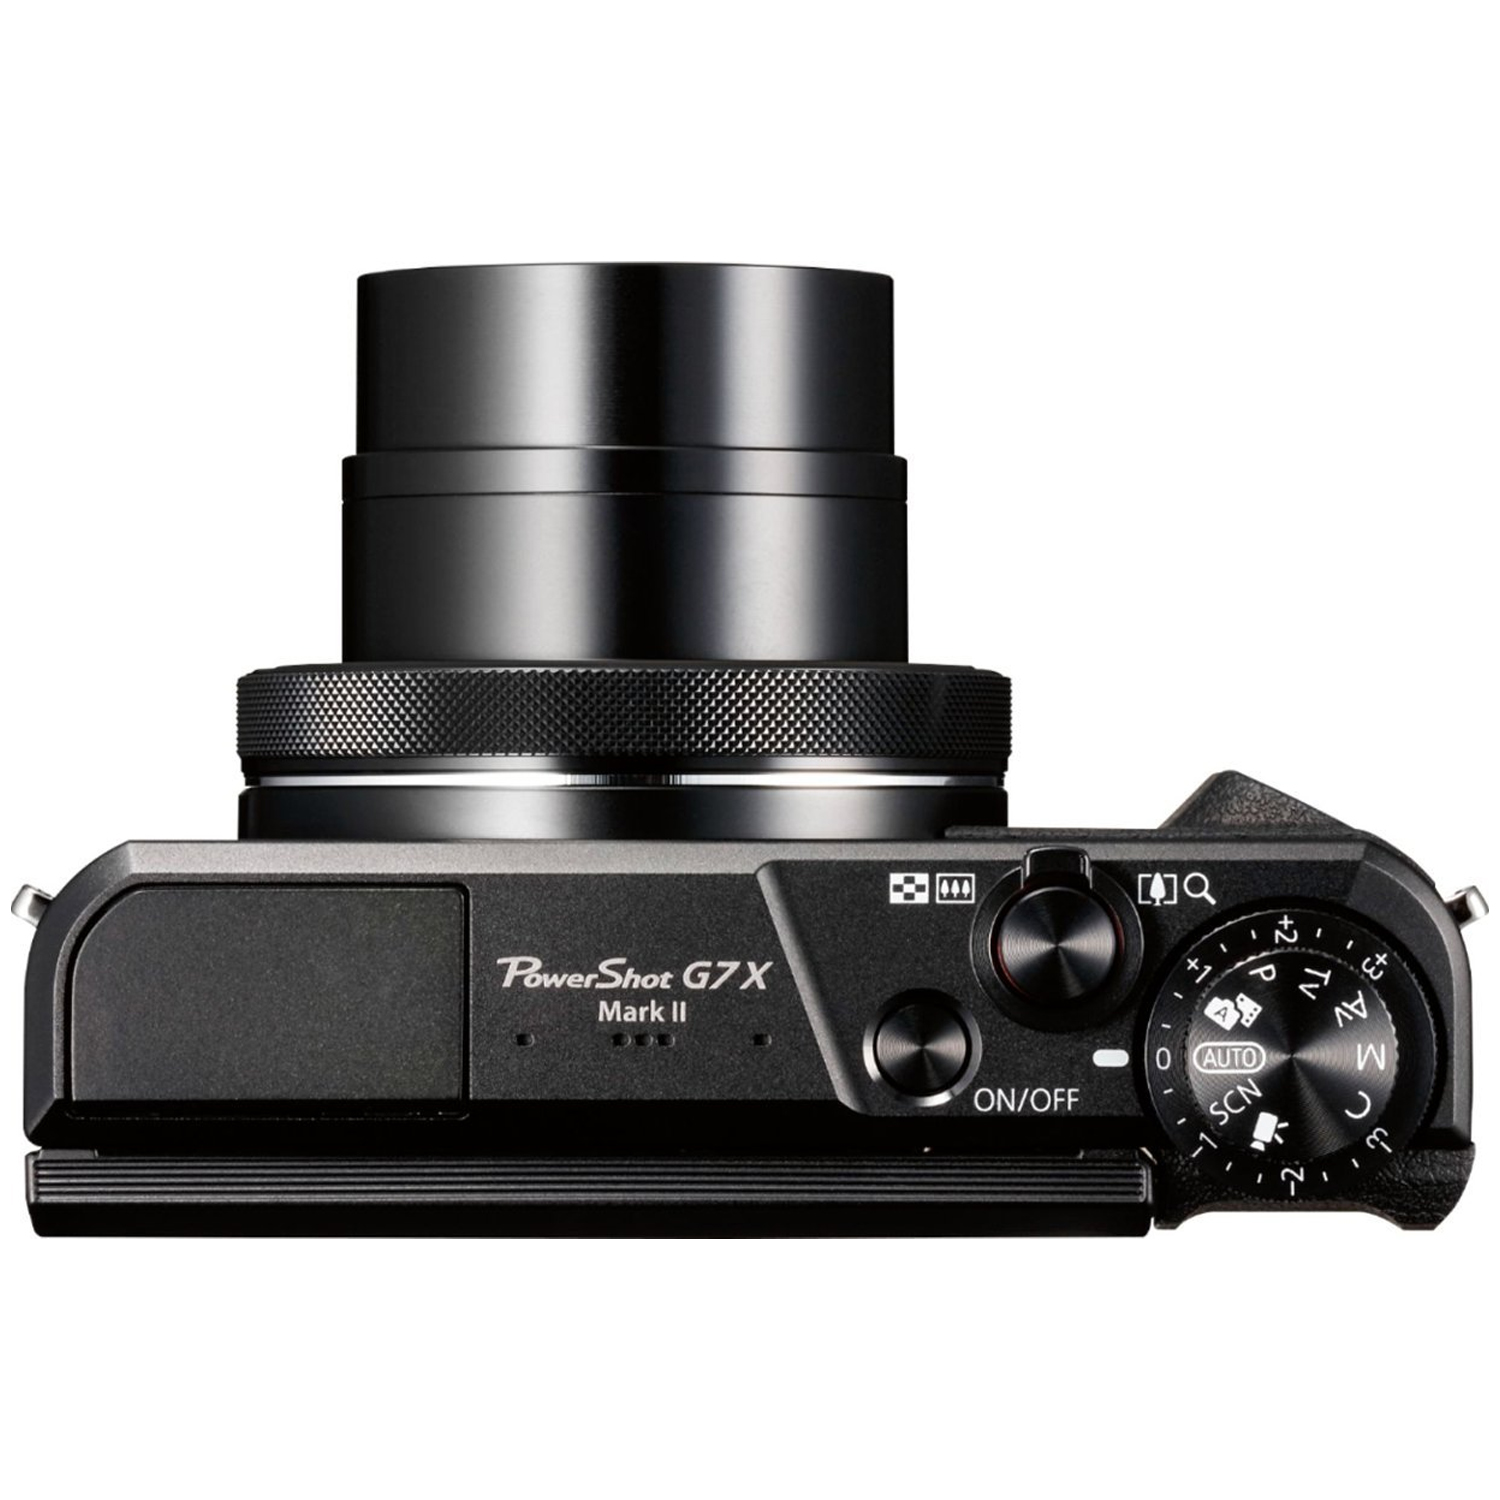 Canon PowerShot G7 X Mark II 20.1MP Digital Camera- Black - image 2 of 7